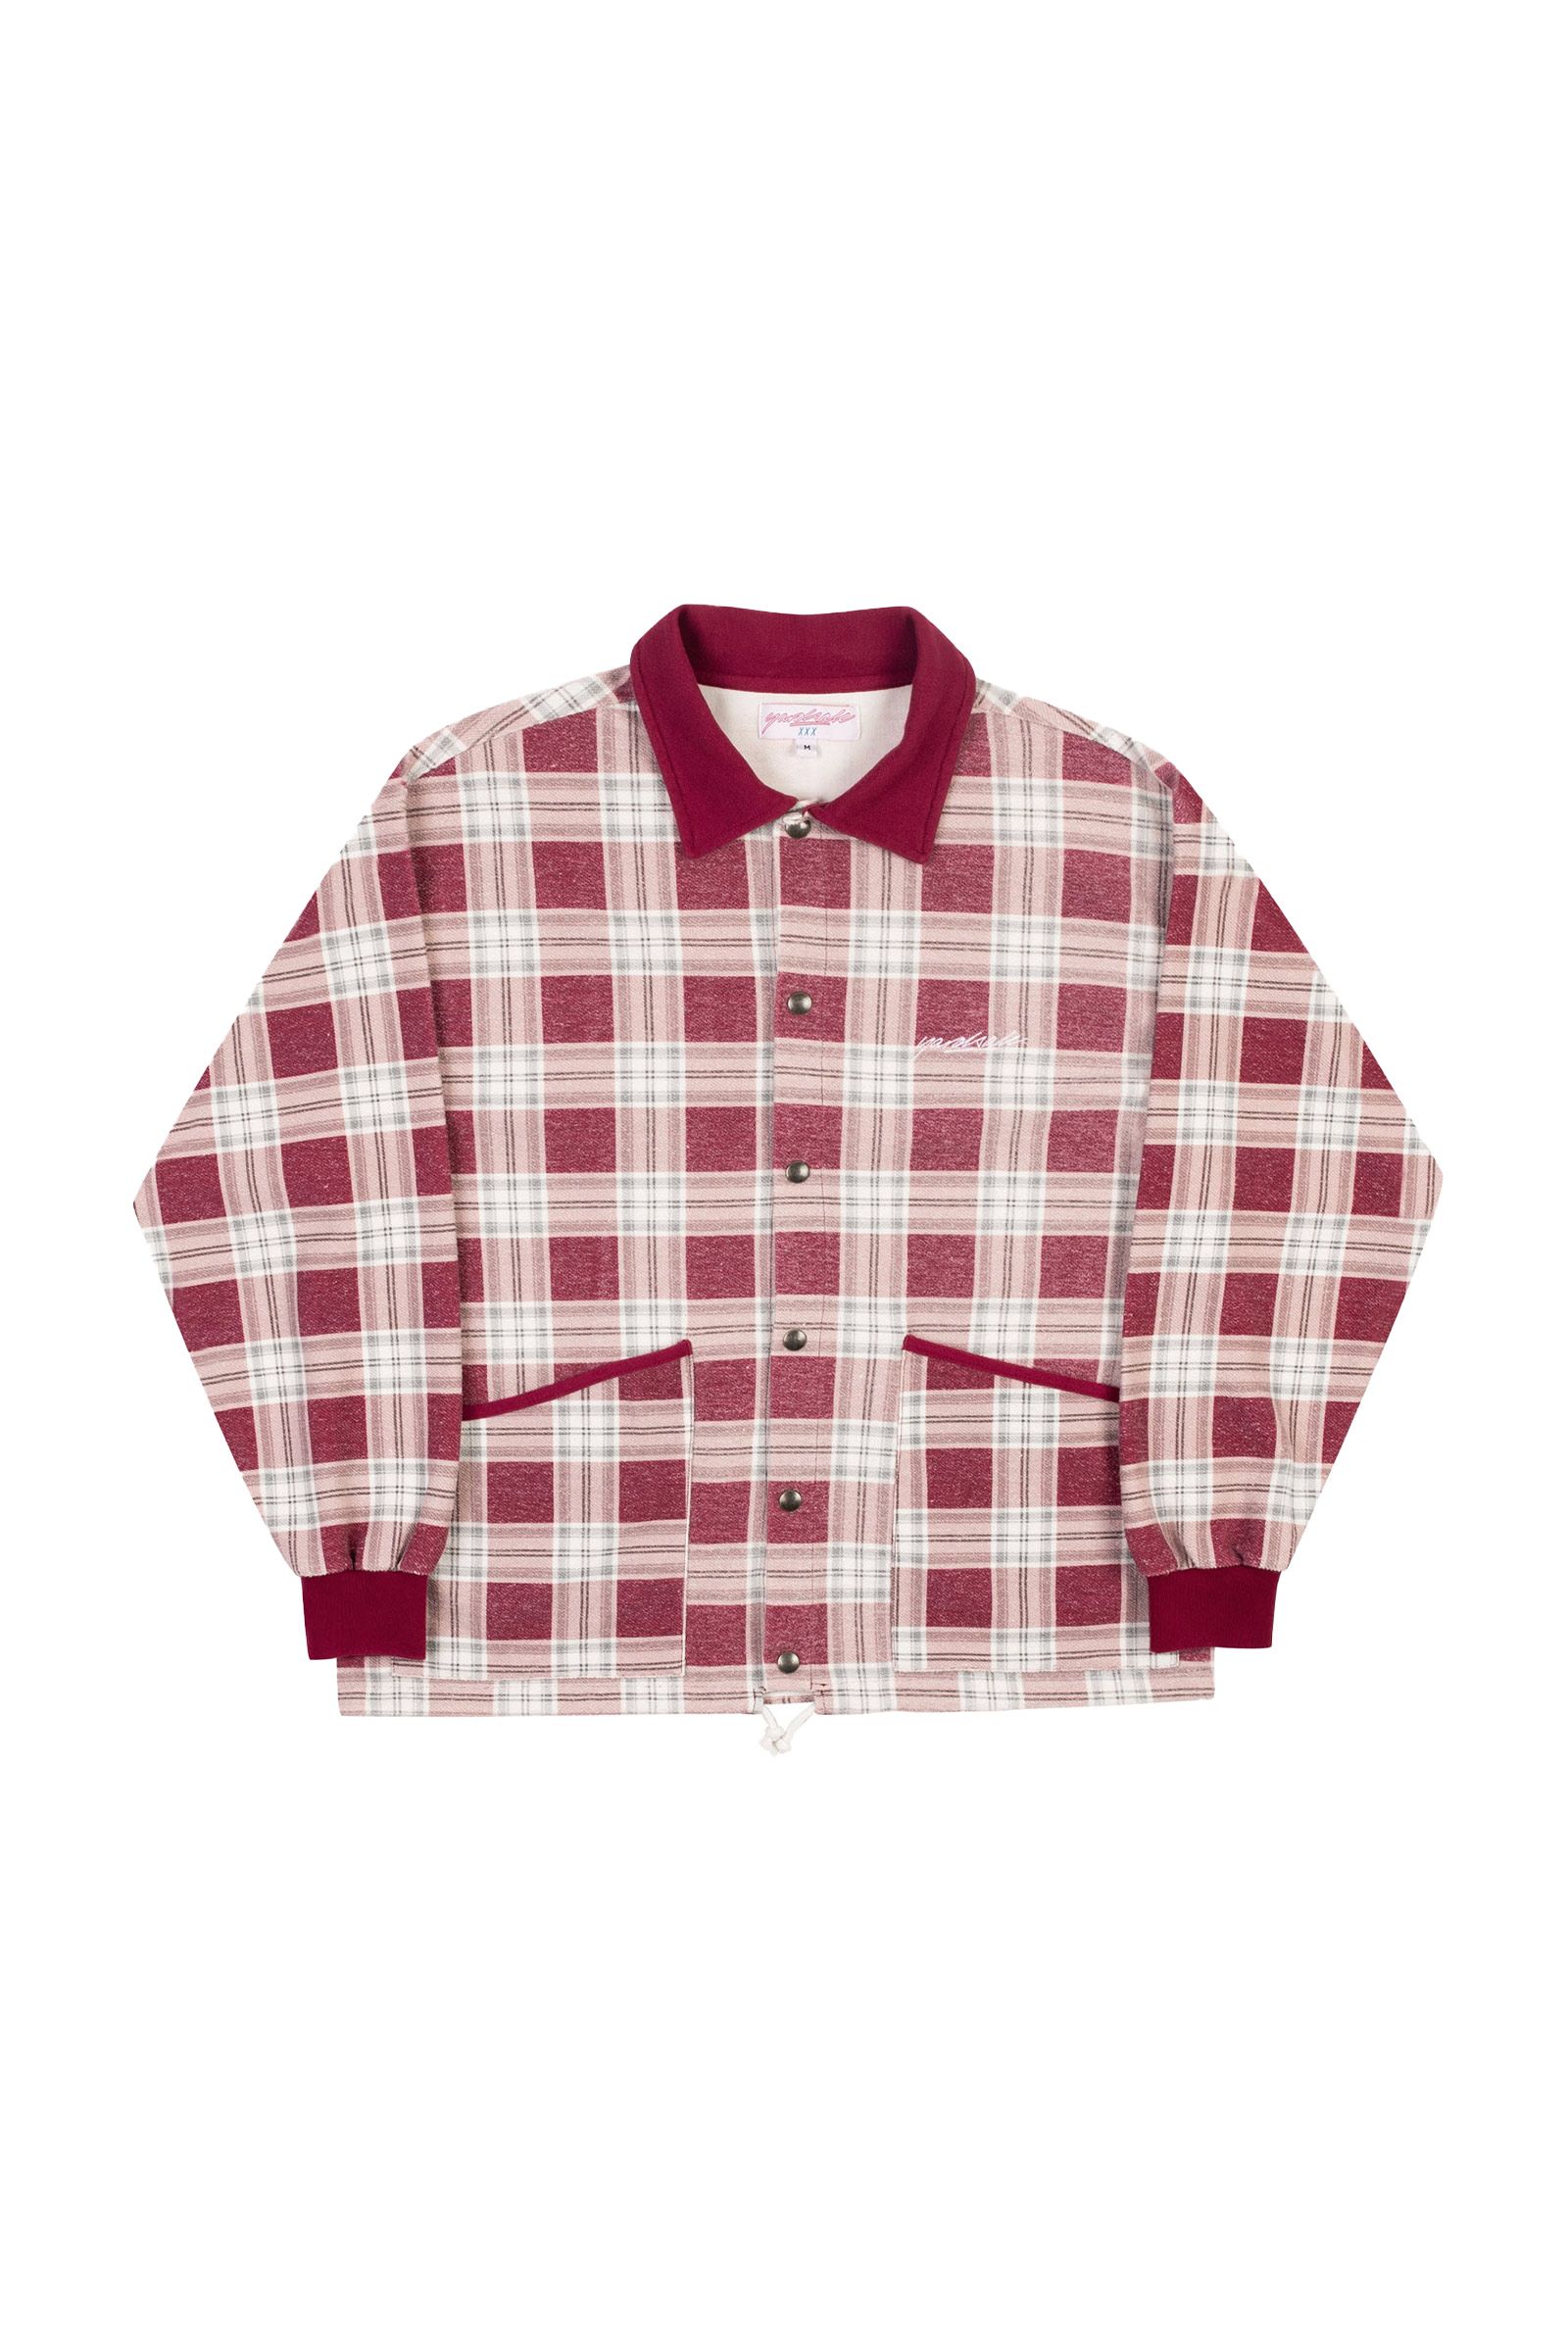 M【日本産】YARDSALE Lumber shirt red ヤードセール シャツ メンズM￥12,600-epmhv.quito.gob.ec